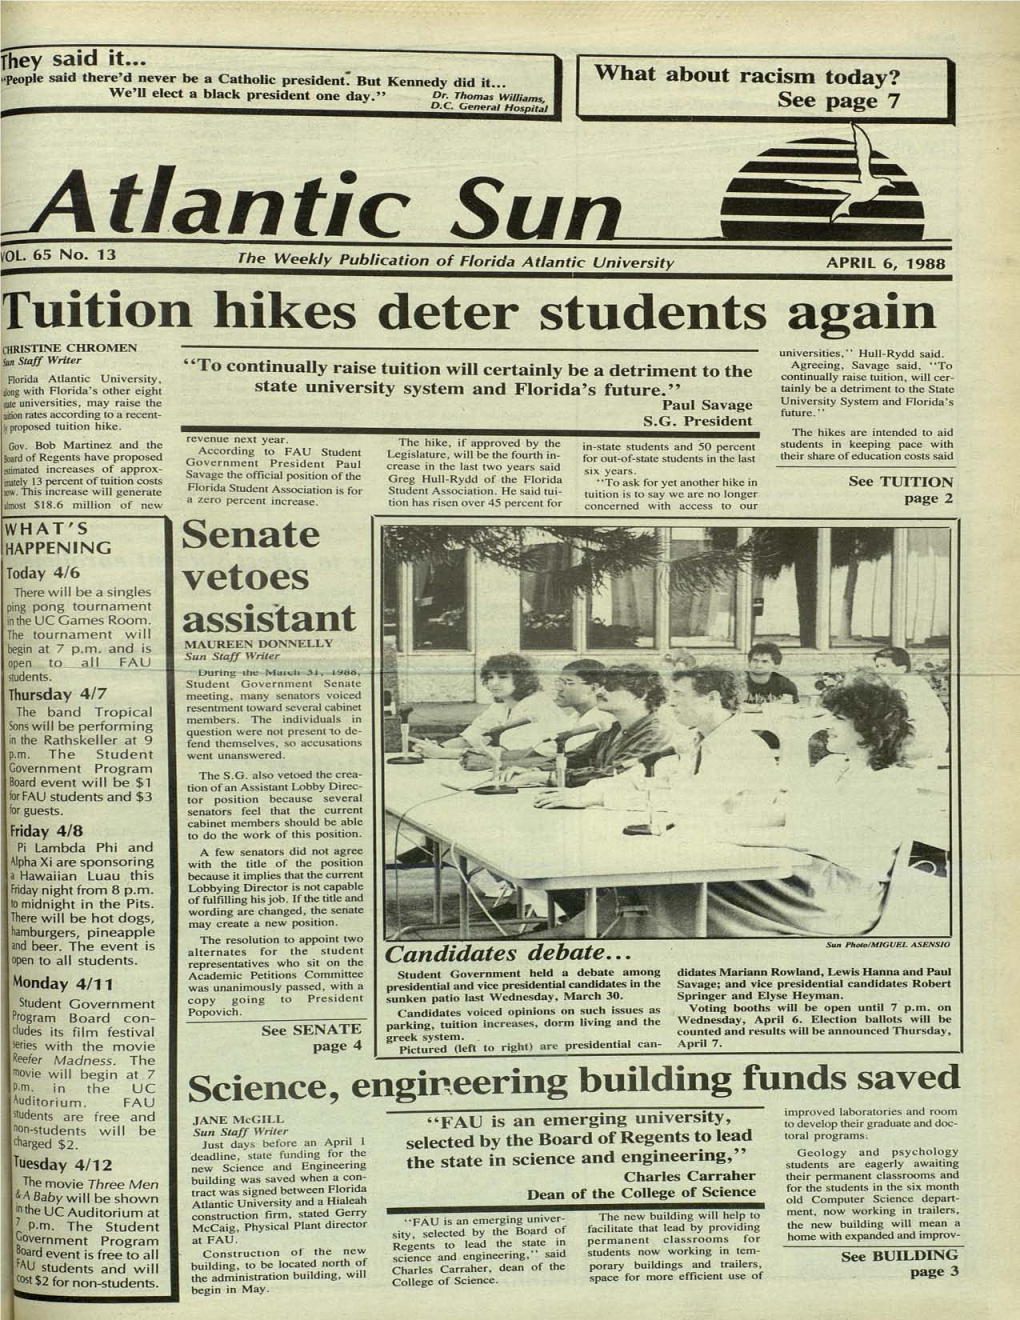 Latjantic Su the Weekly Publication of Florida Atlantic University April 6, 1988